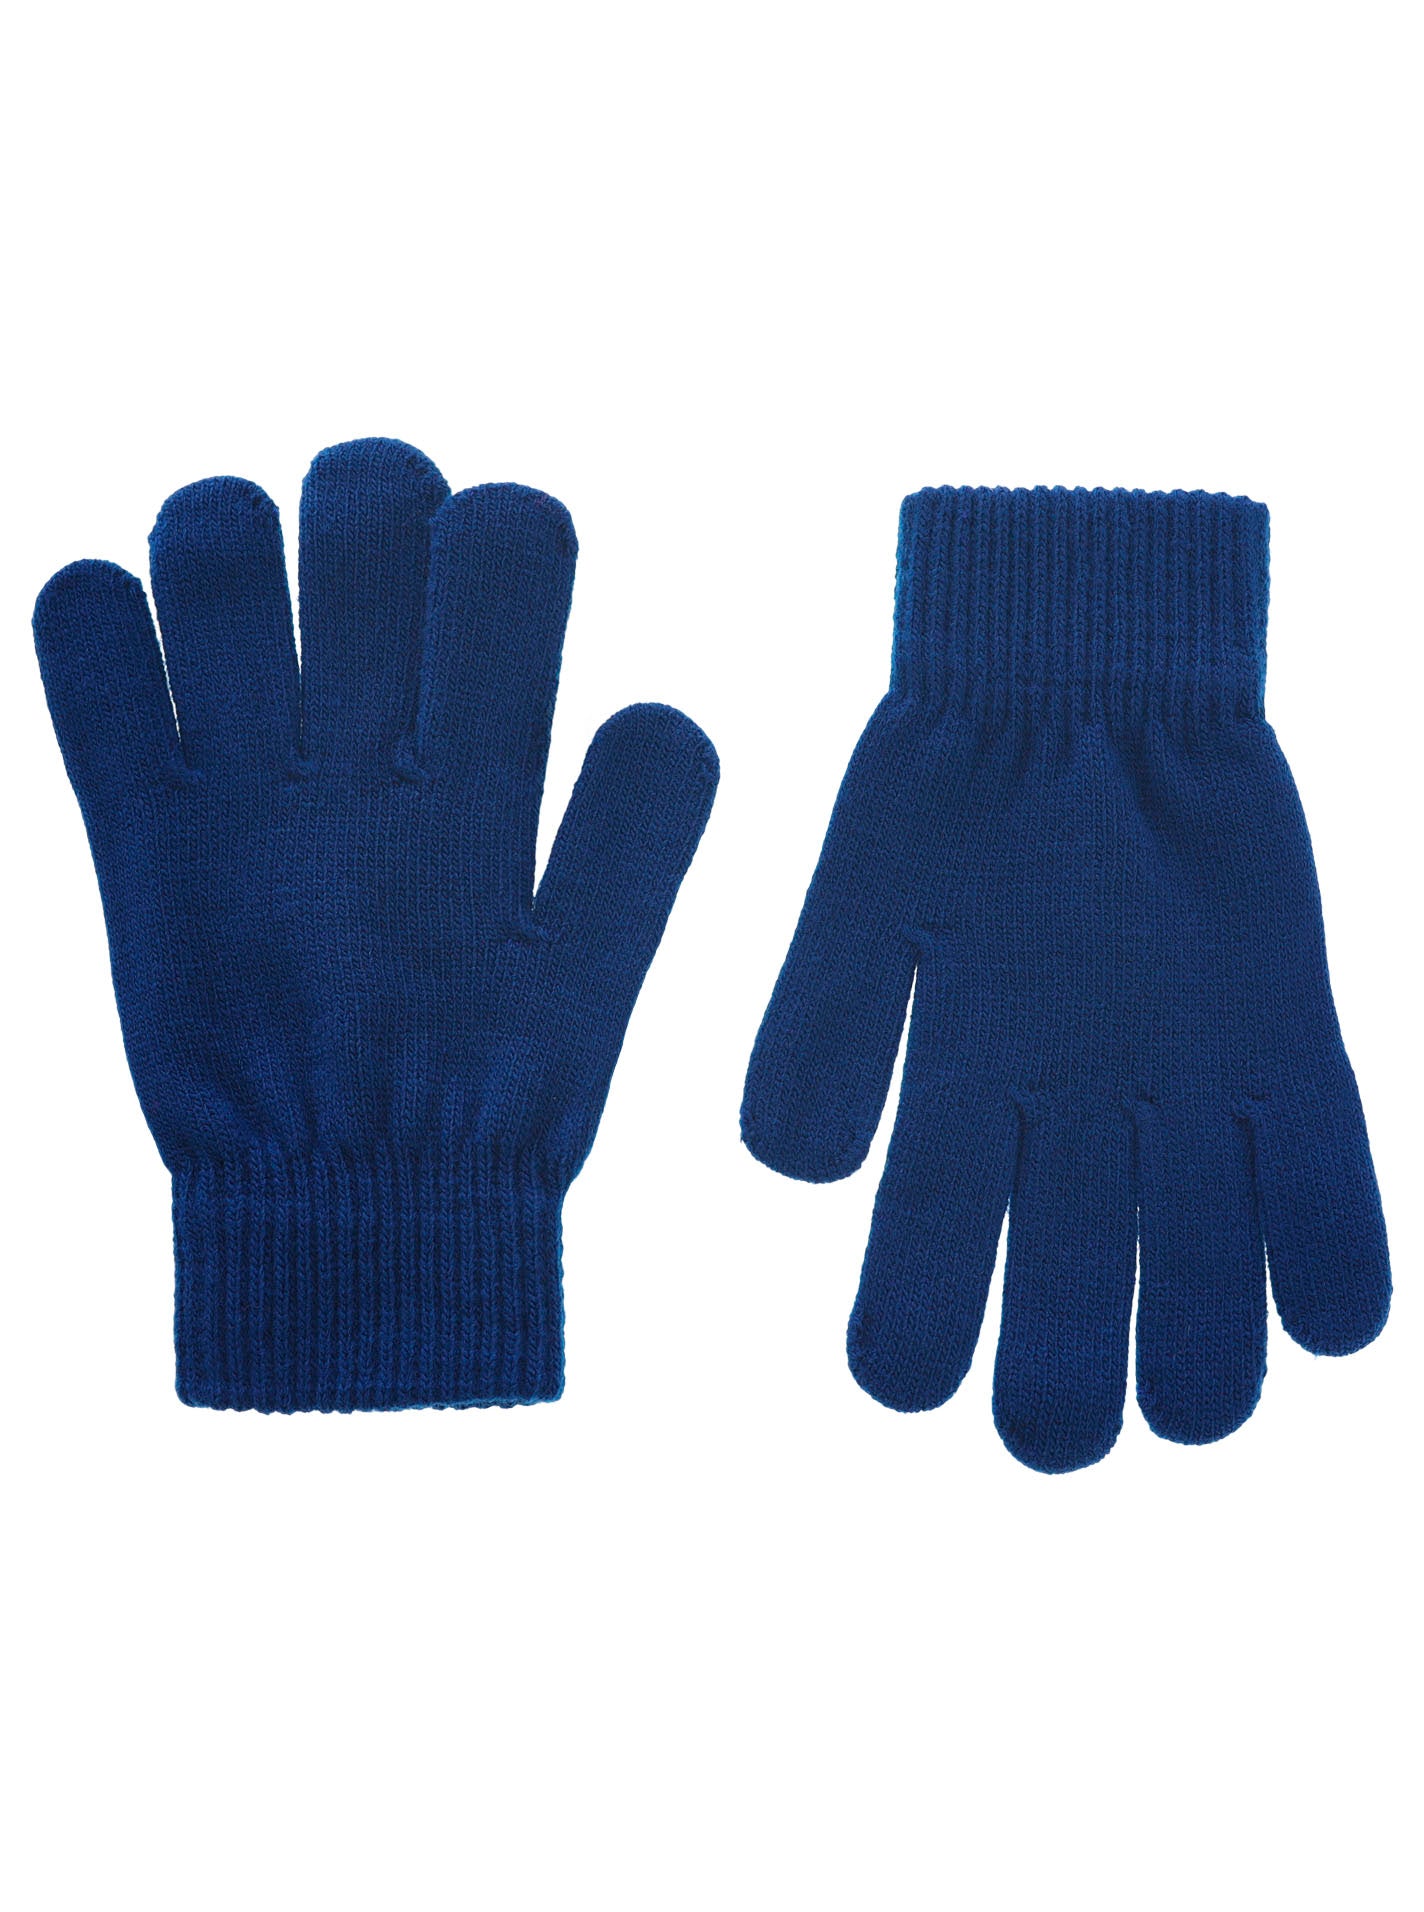 Zwillingsherz Unisex Handschuhe Acryl 4605H